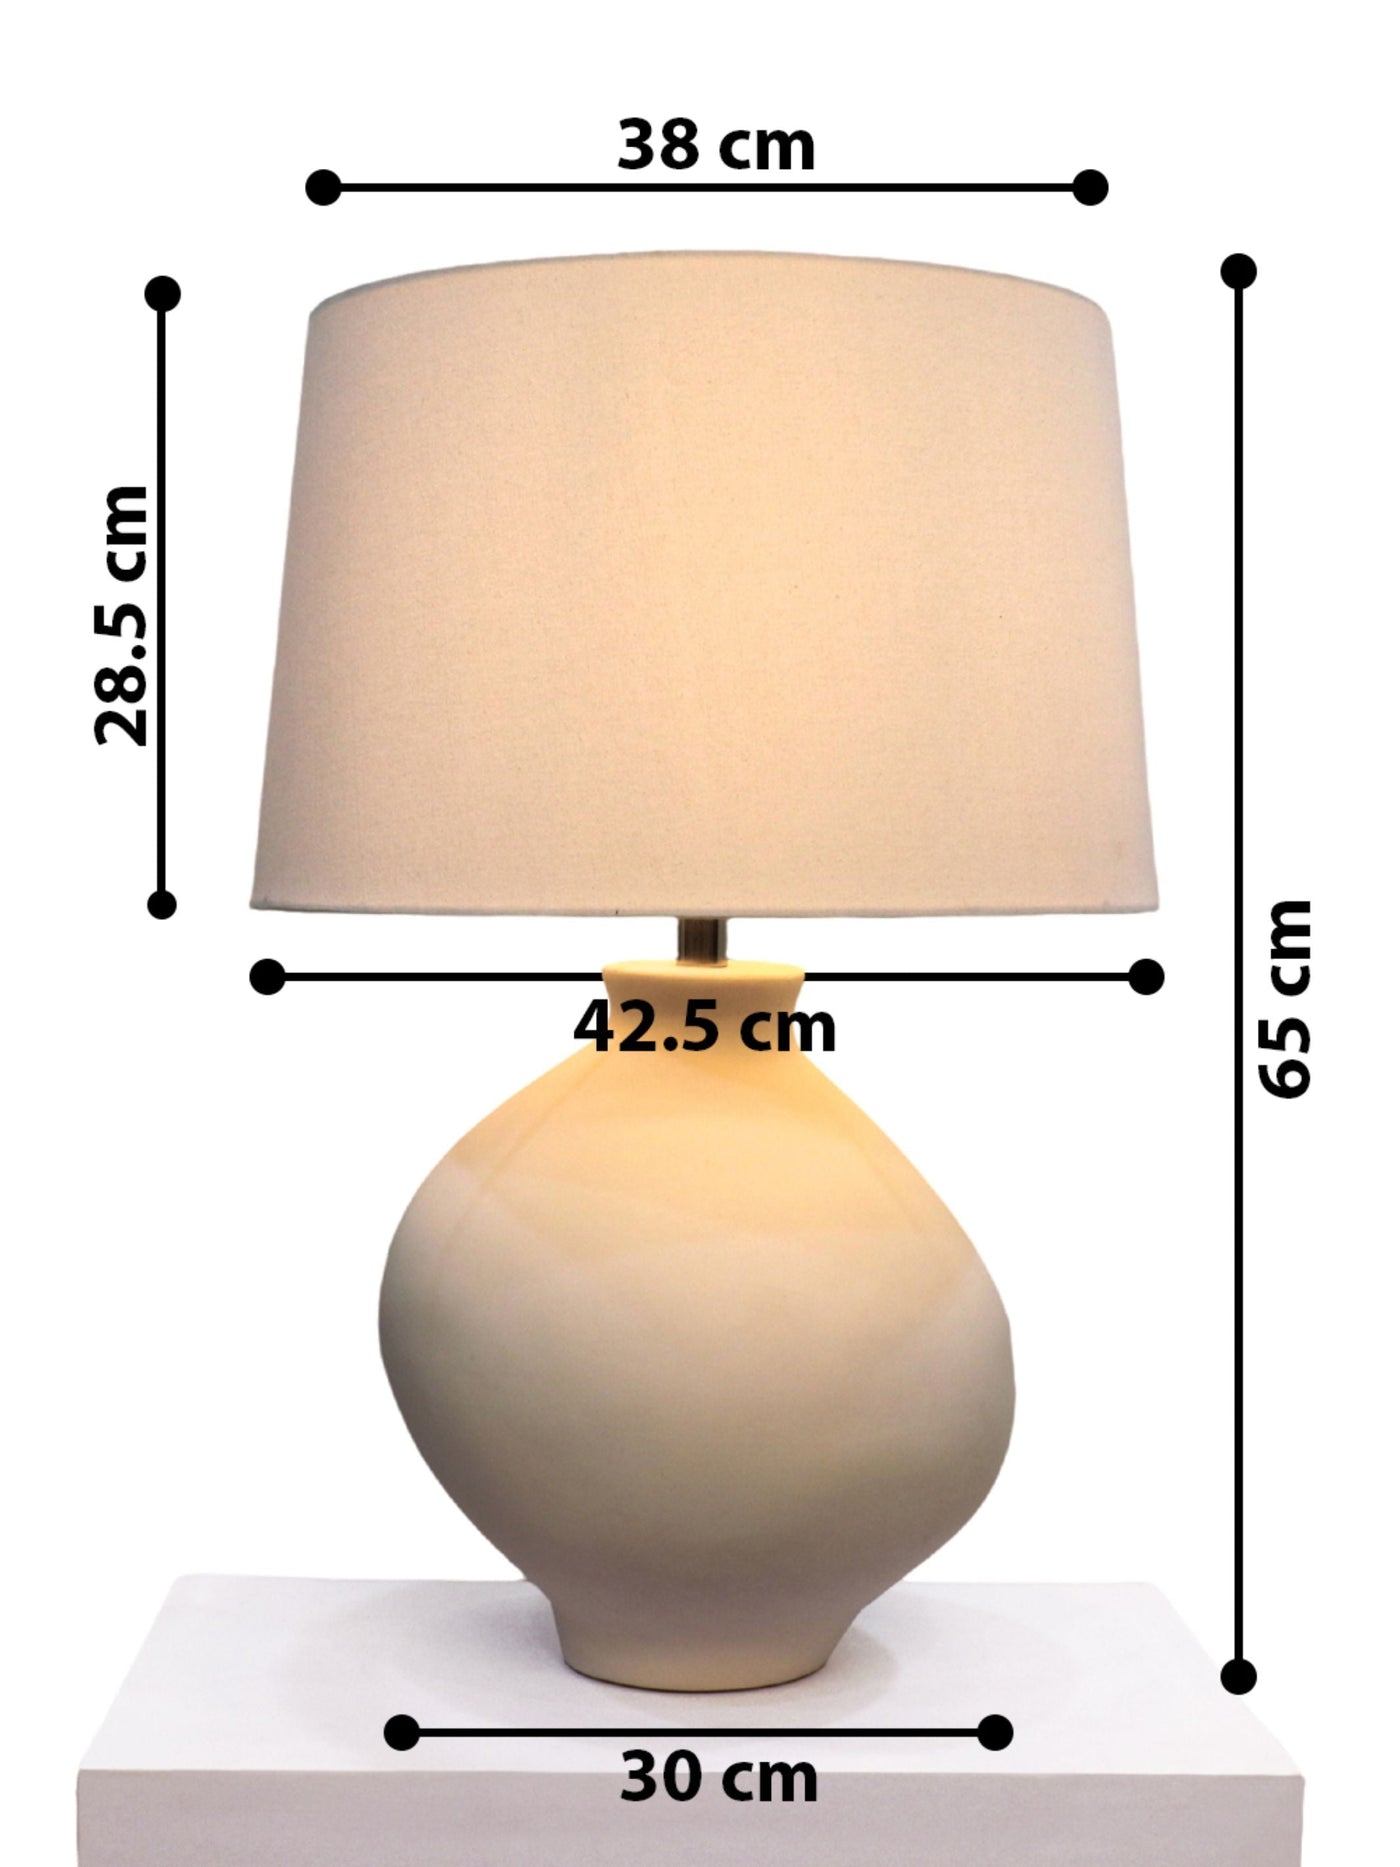 Krug Oval Table Lamp